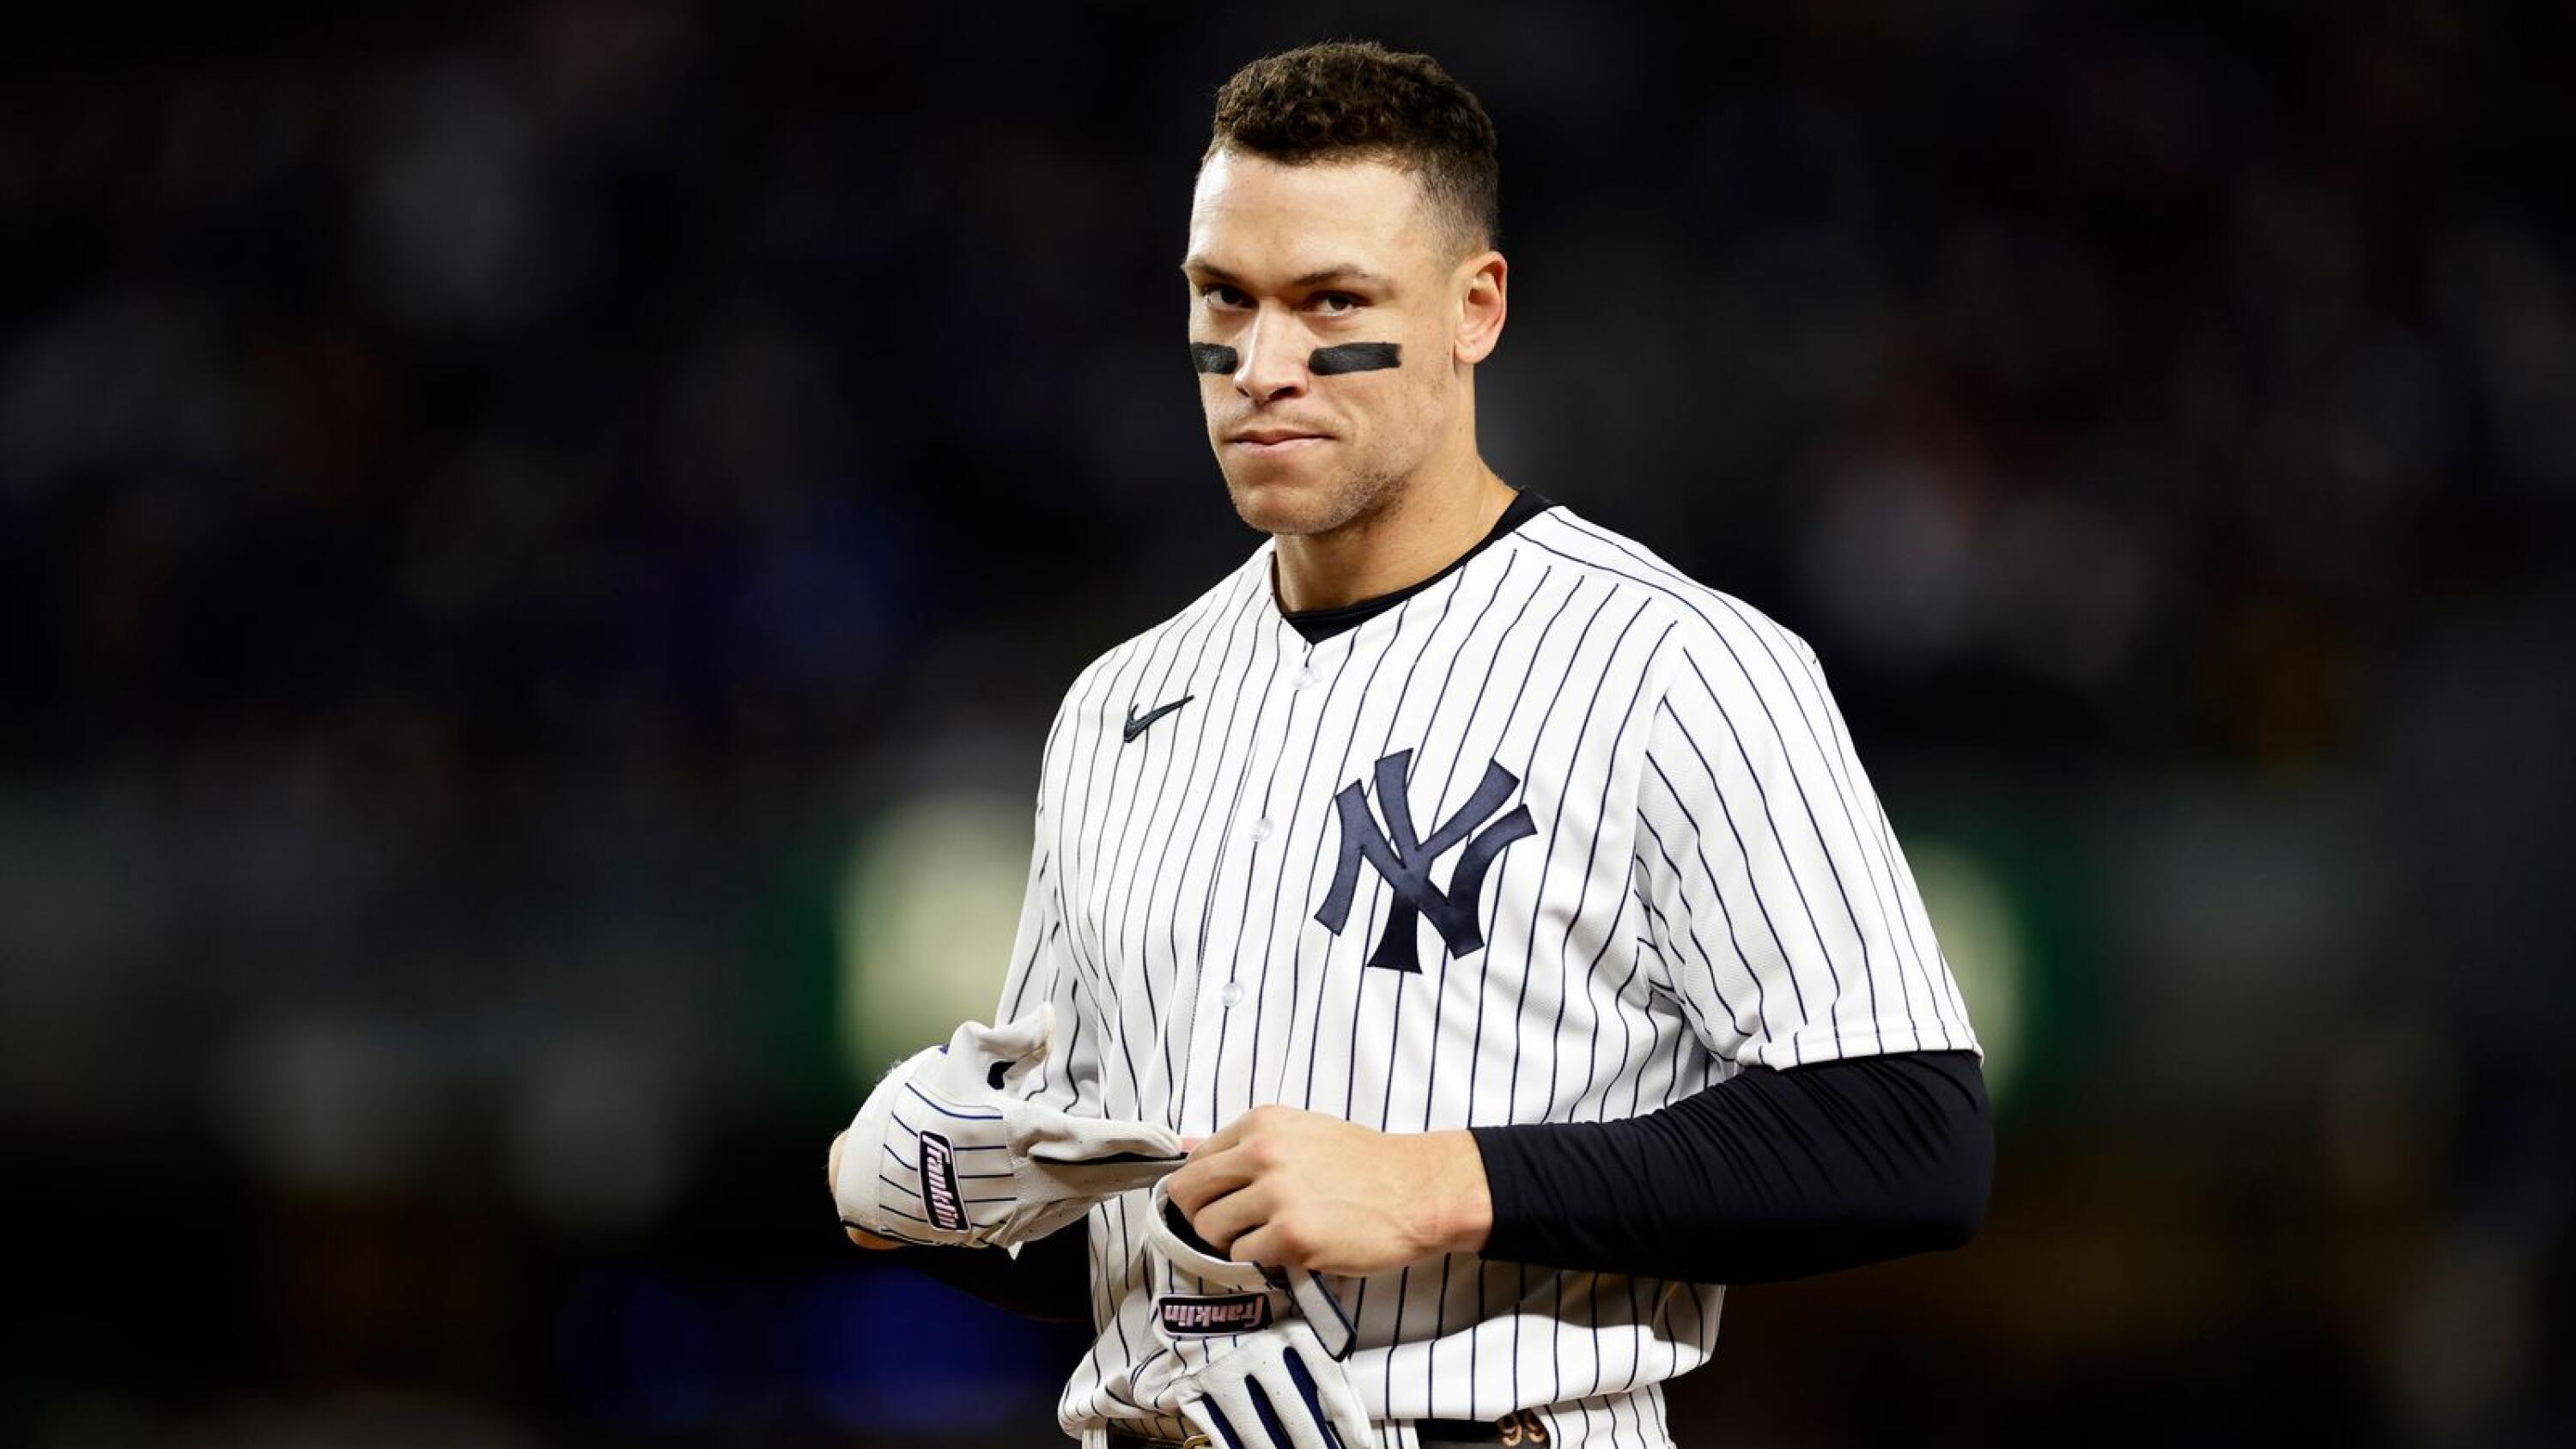 Aaron Judge New York Yankees 61 Home Runs, 4x All-star, 2x Silver